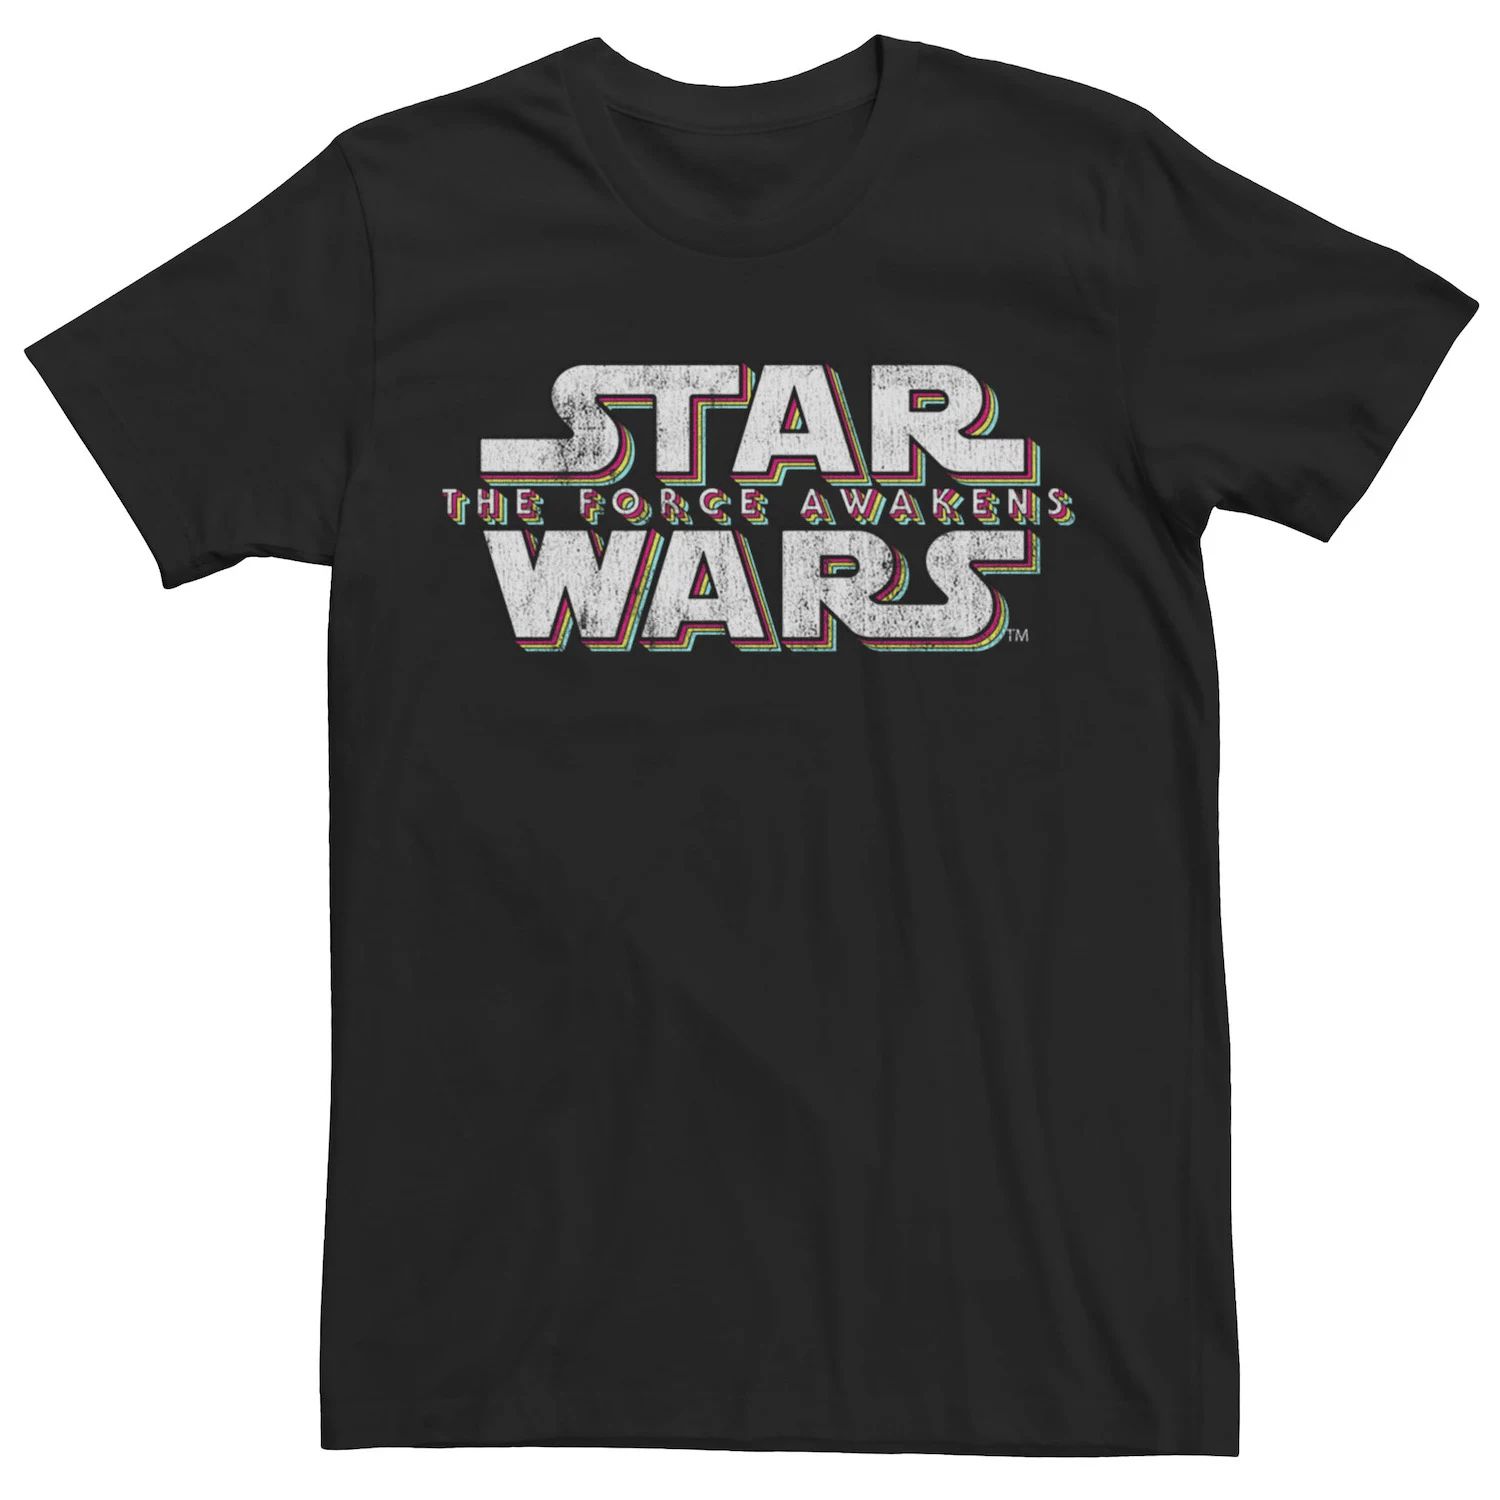 Мужская футболка с логотипом The Force Awakens Title Star Wars